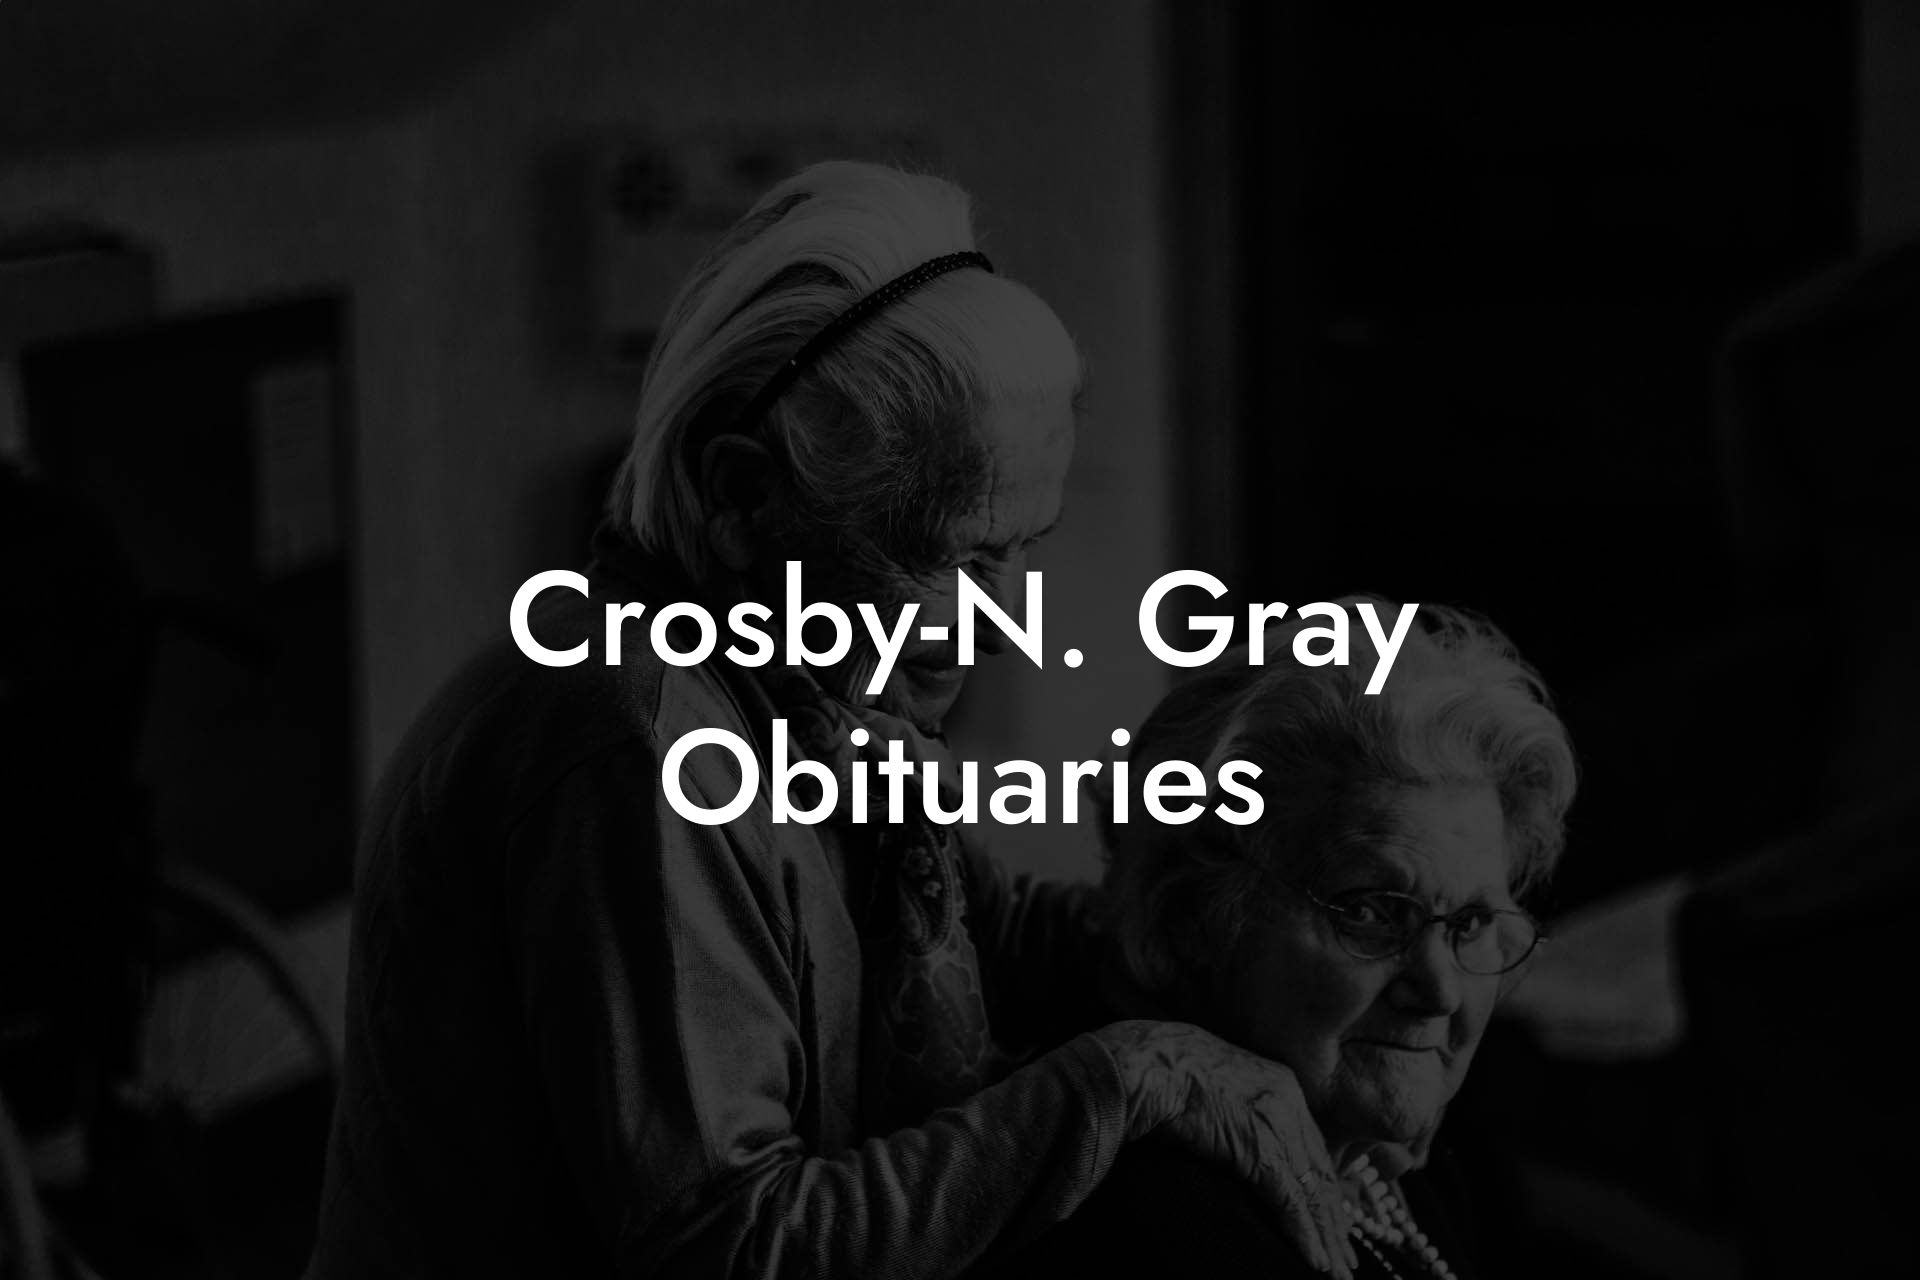 Crosby-N. Gray Obituaries